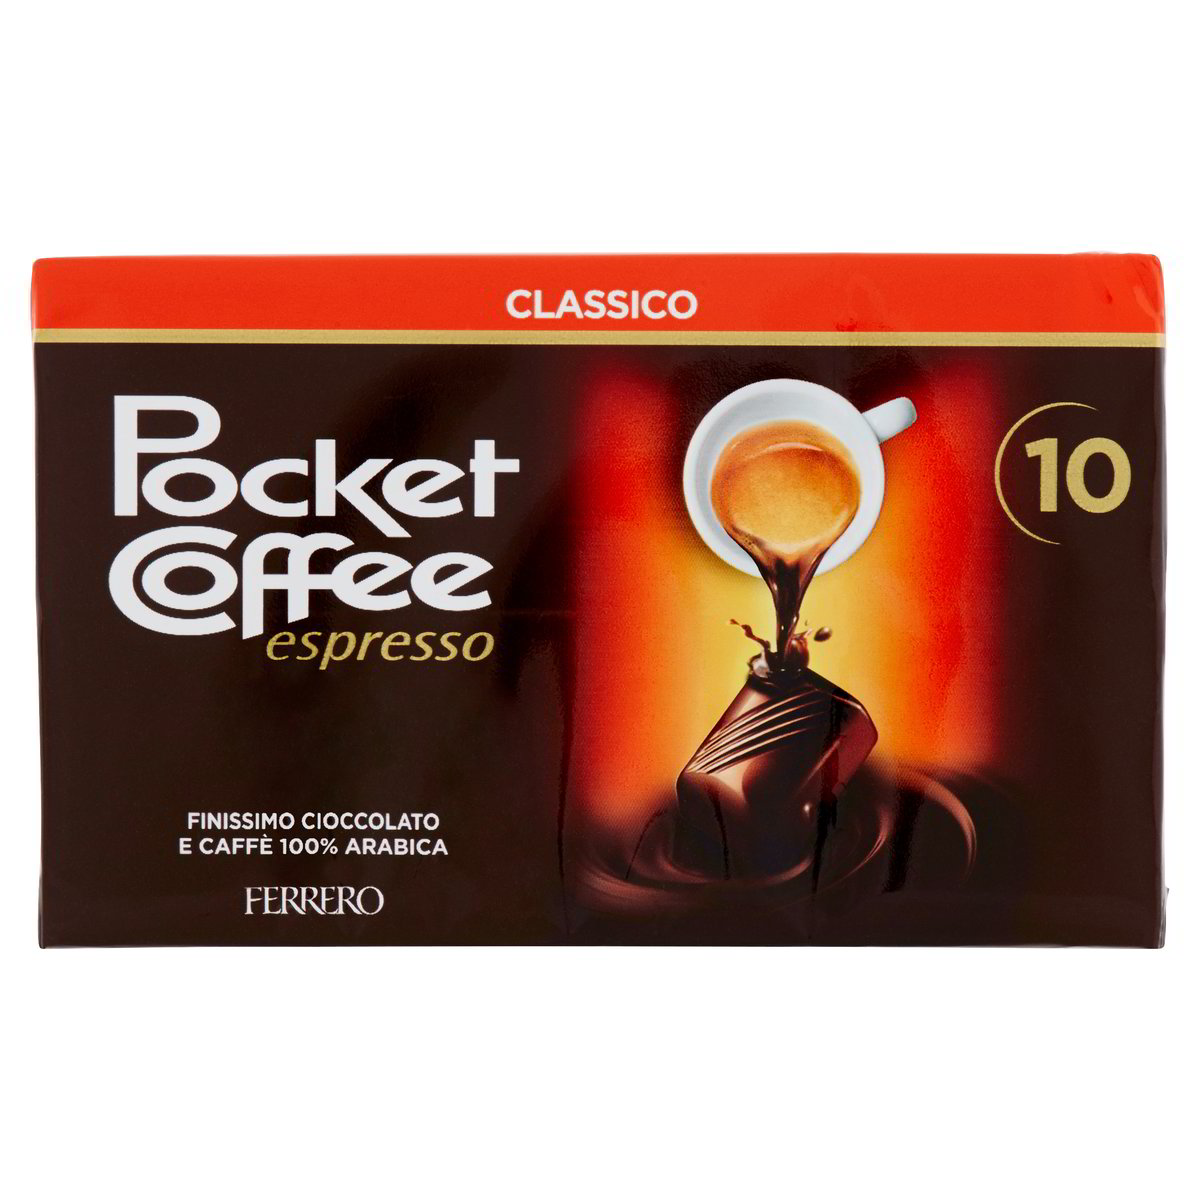 Pocket Coffee Espresso Classico